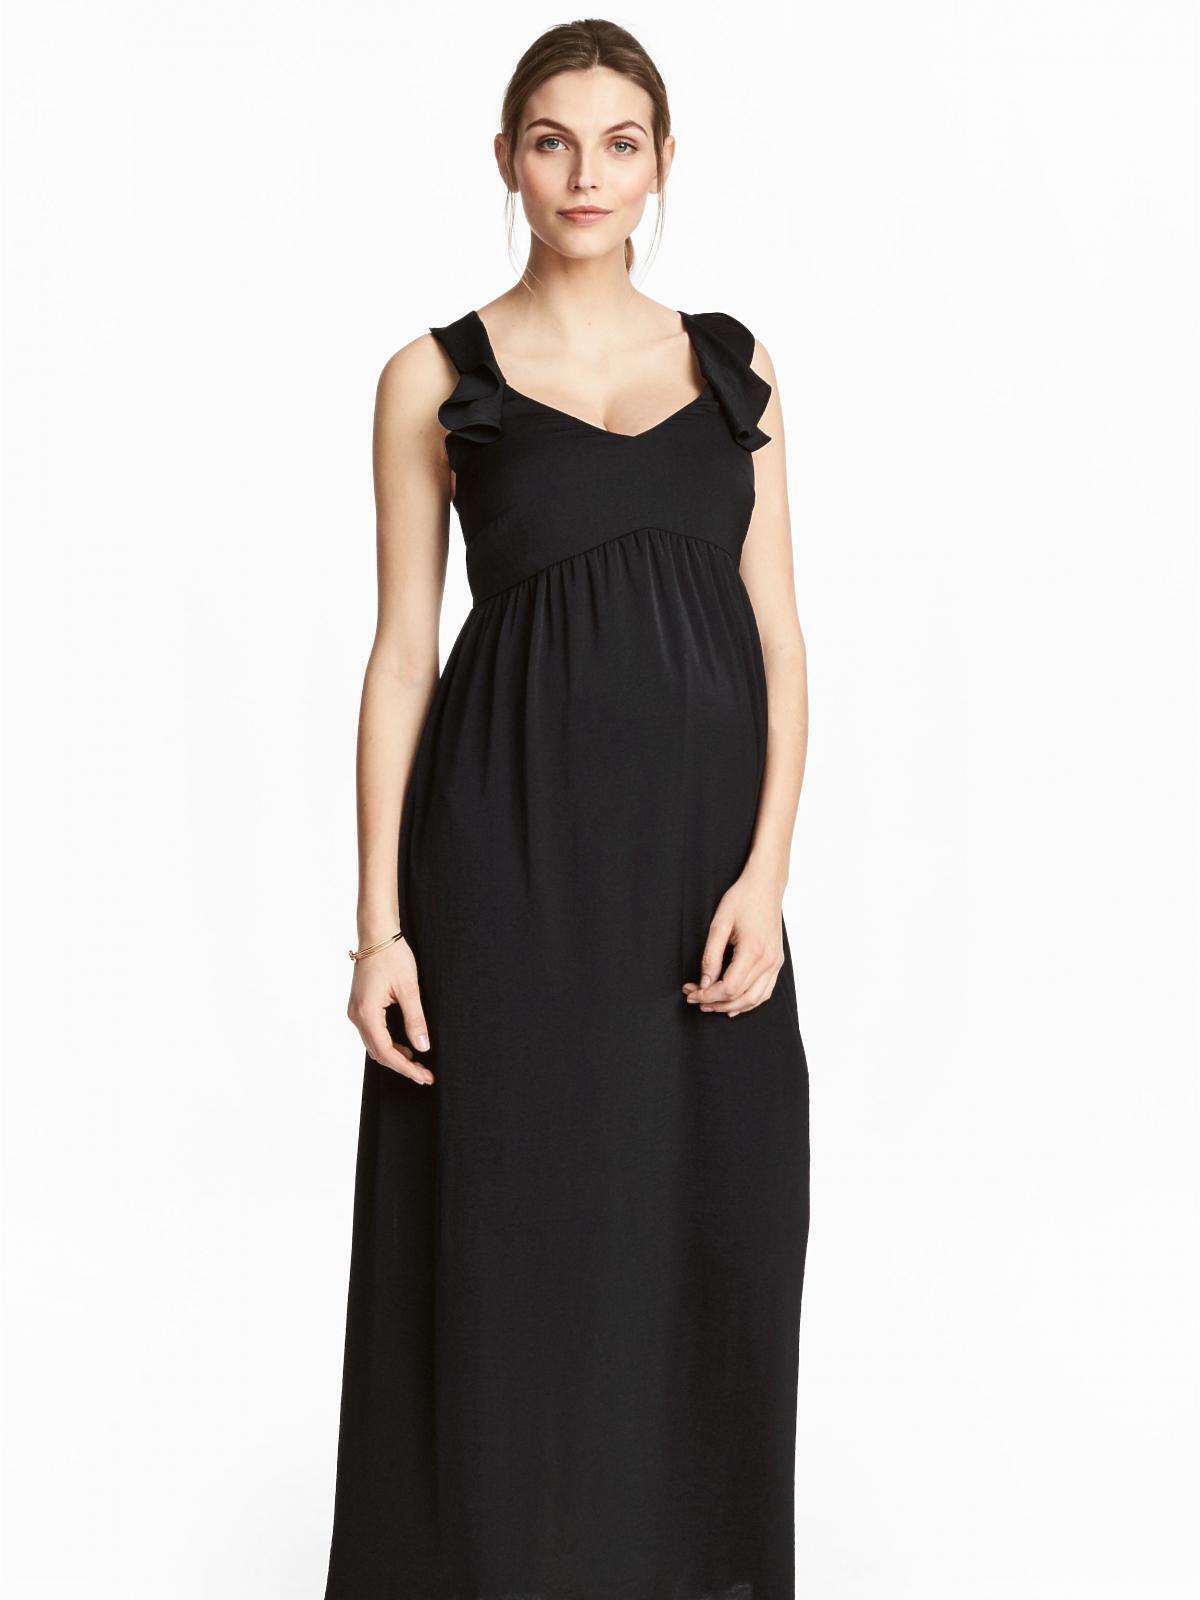 czarna sukienka H&M dla ciężarnej maksi.jpg